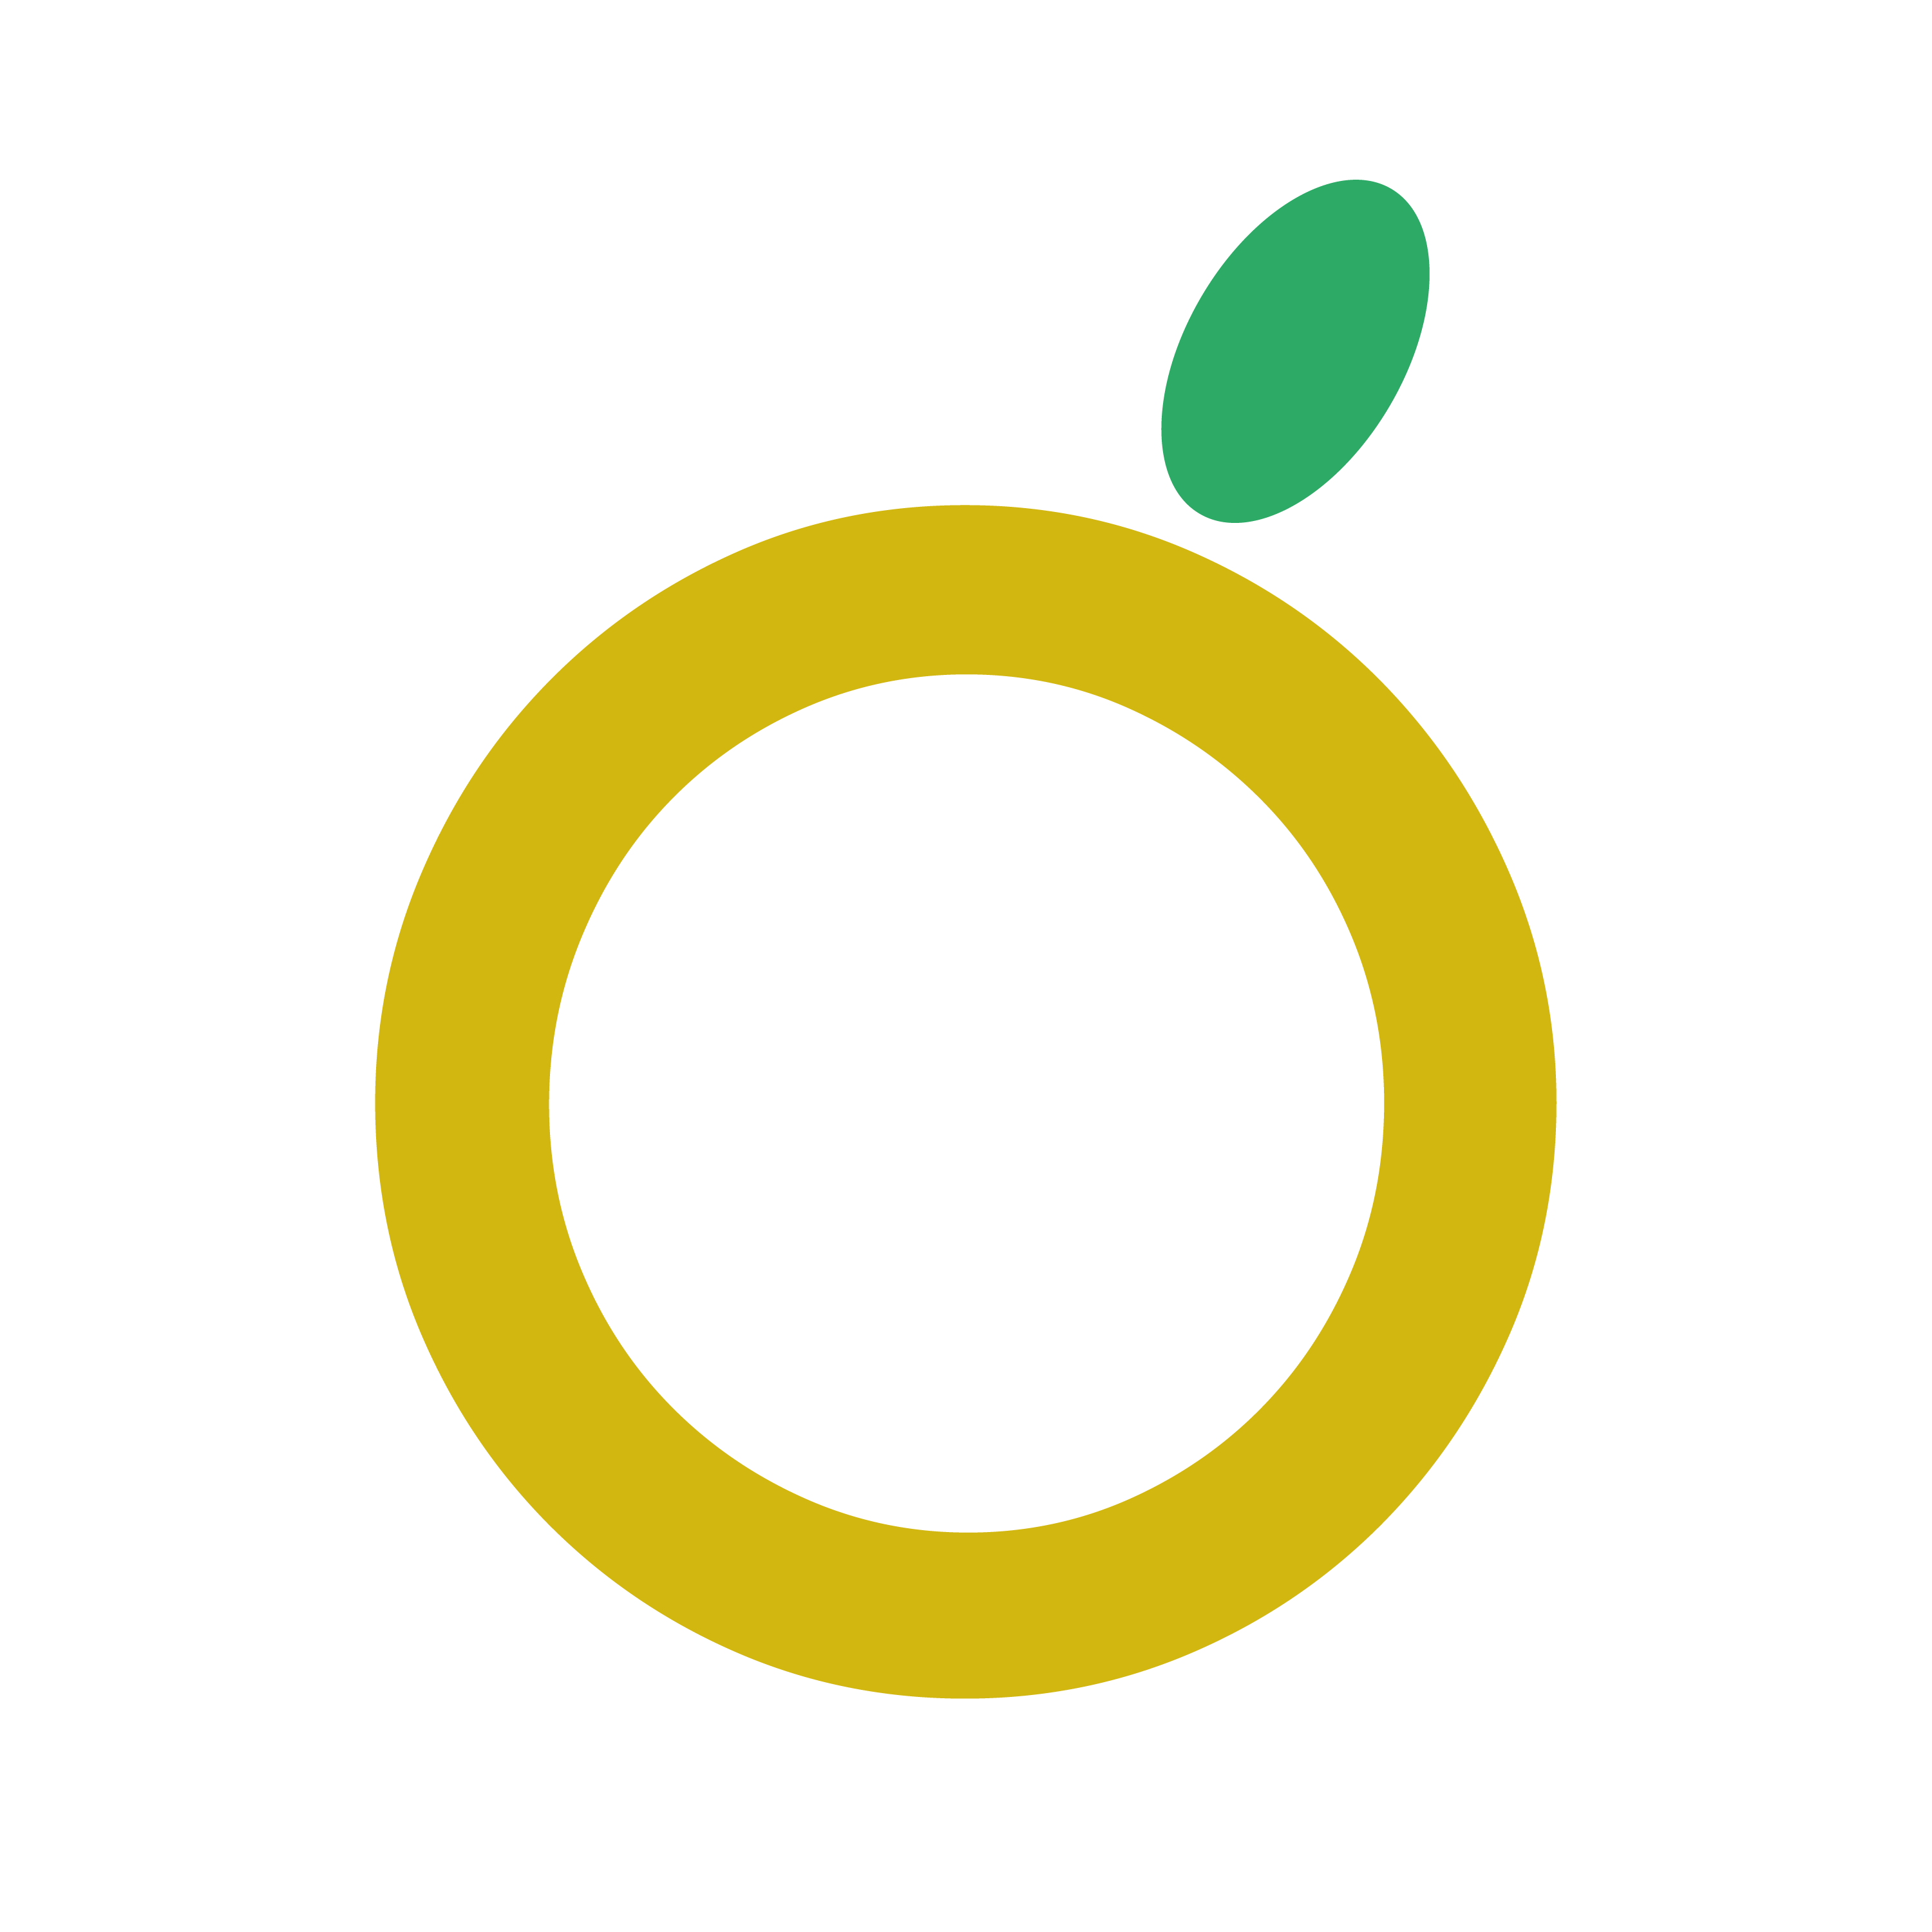 Gold Apple Logo - Gold Apple of Bury